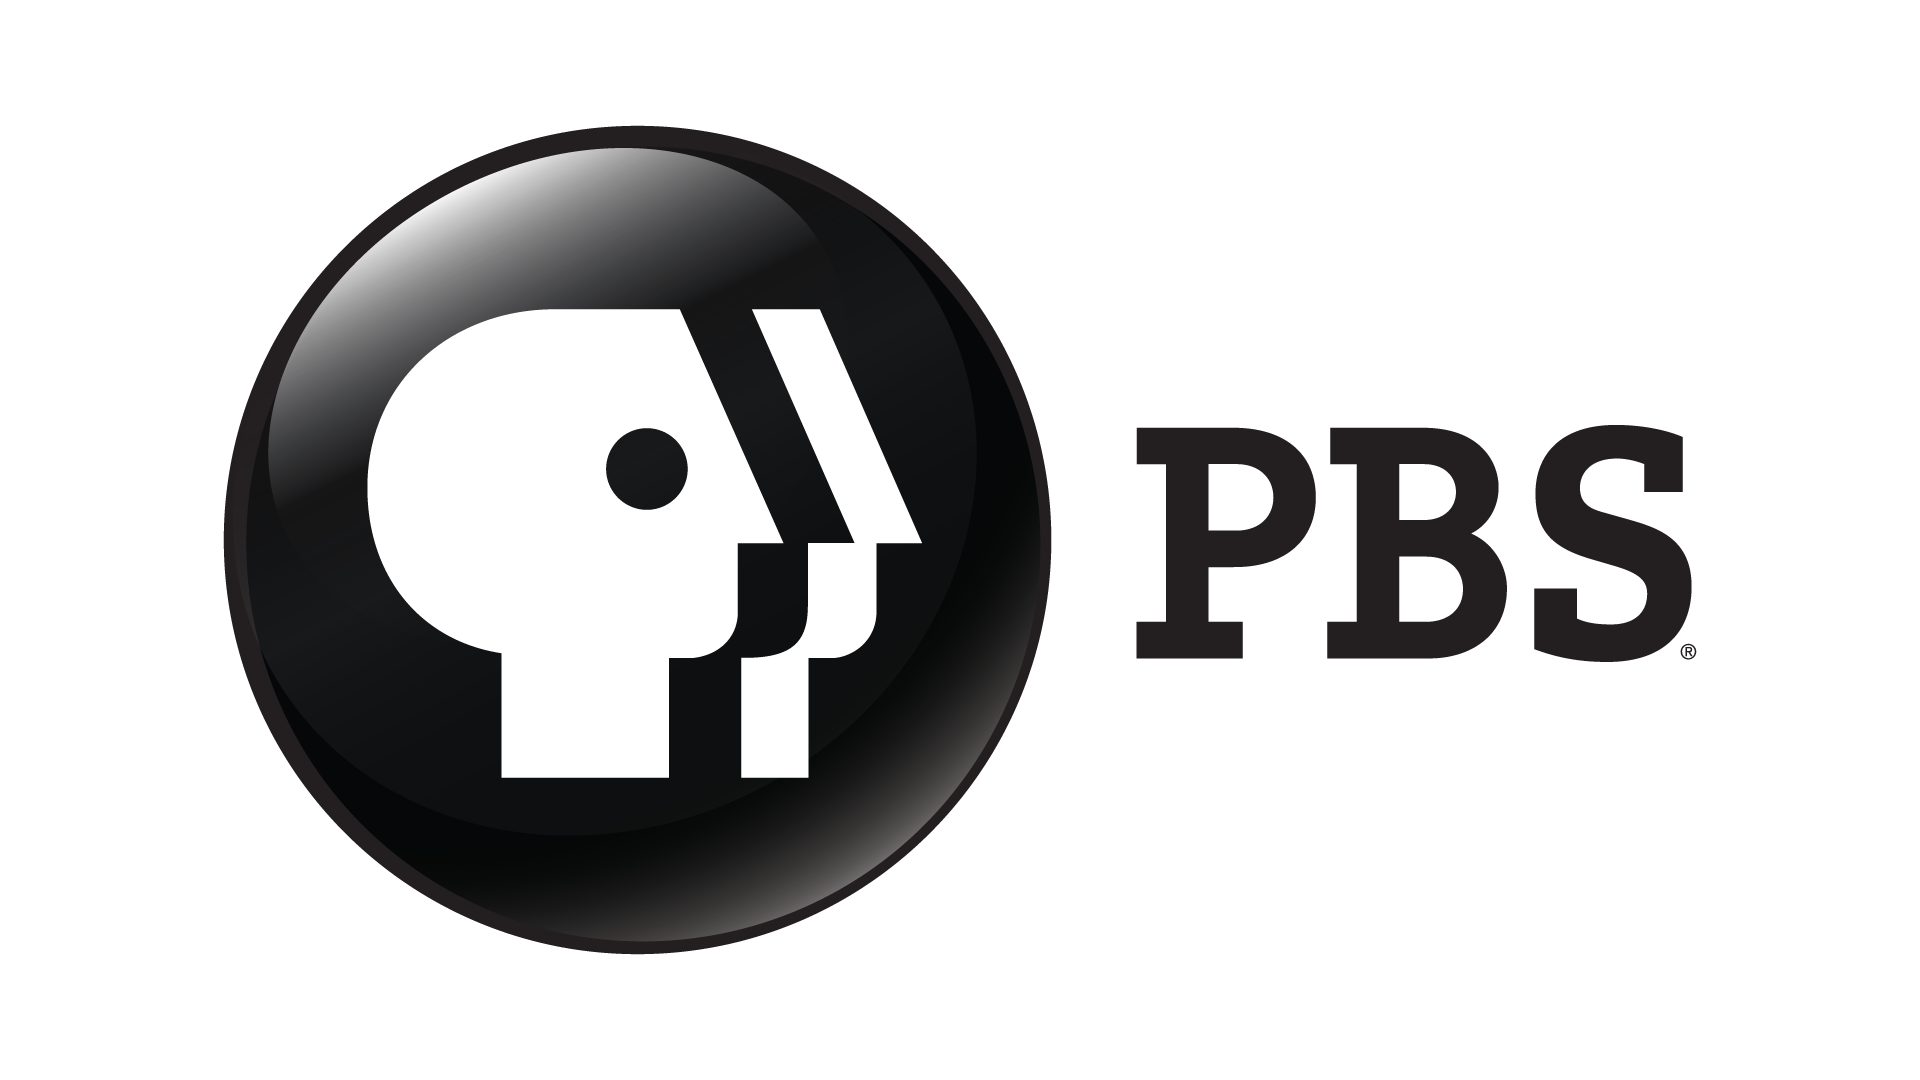 PBS (Public Broadcasting Service) logo